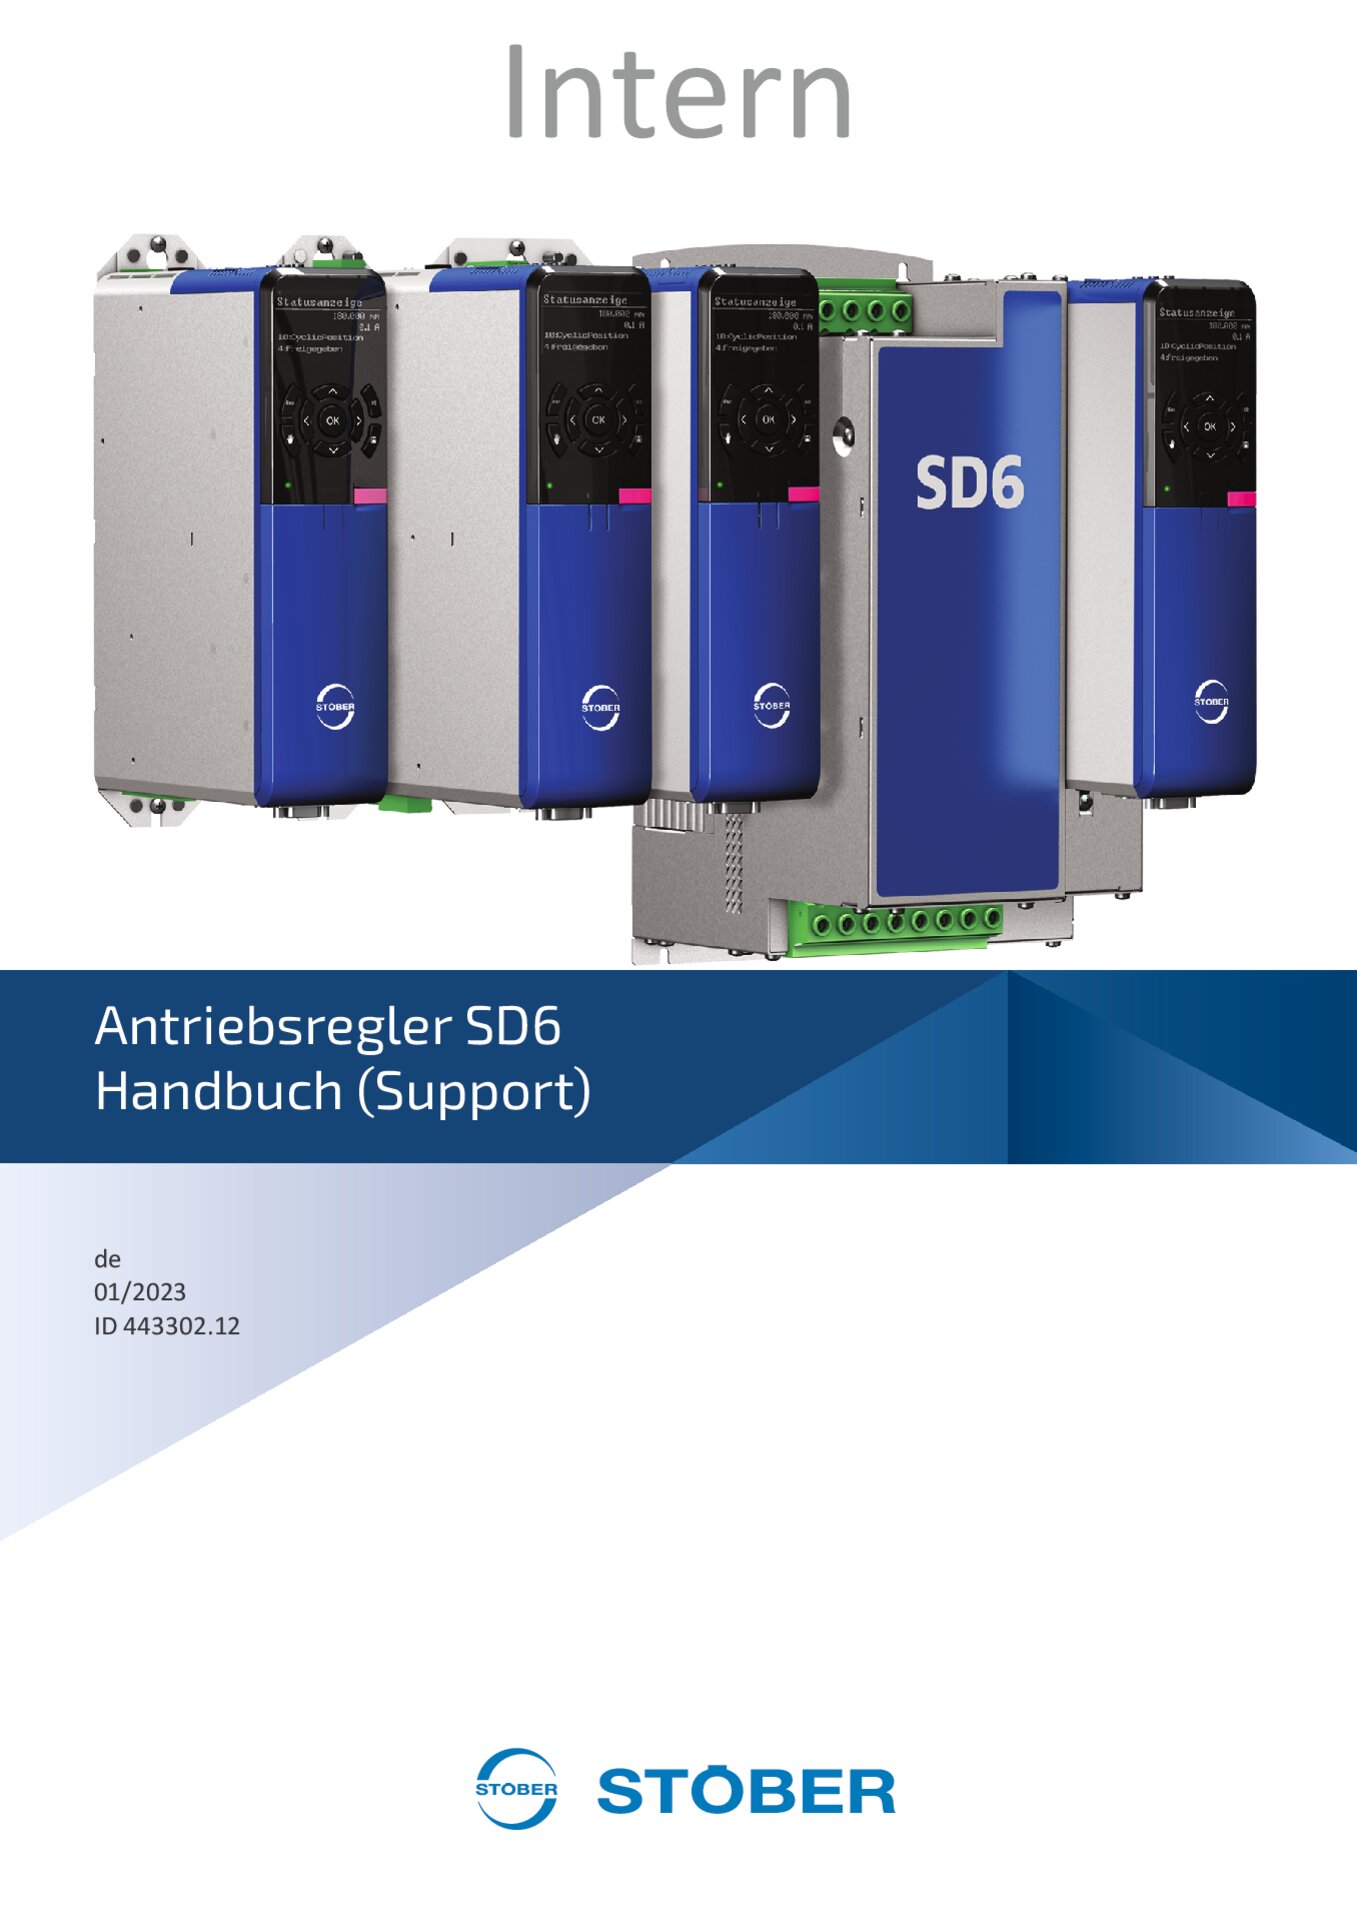 Handbuch SD6 - Support